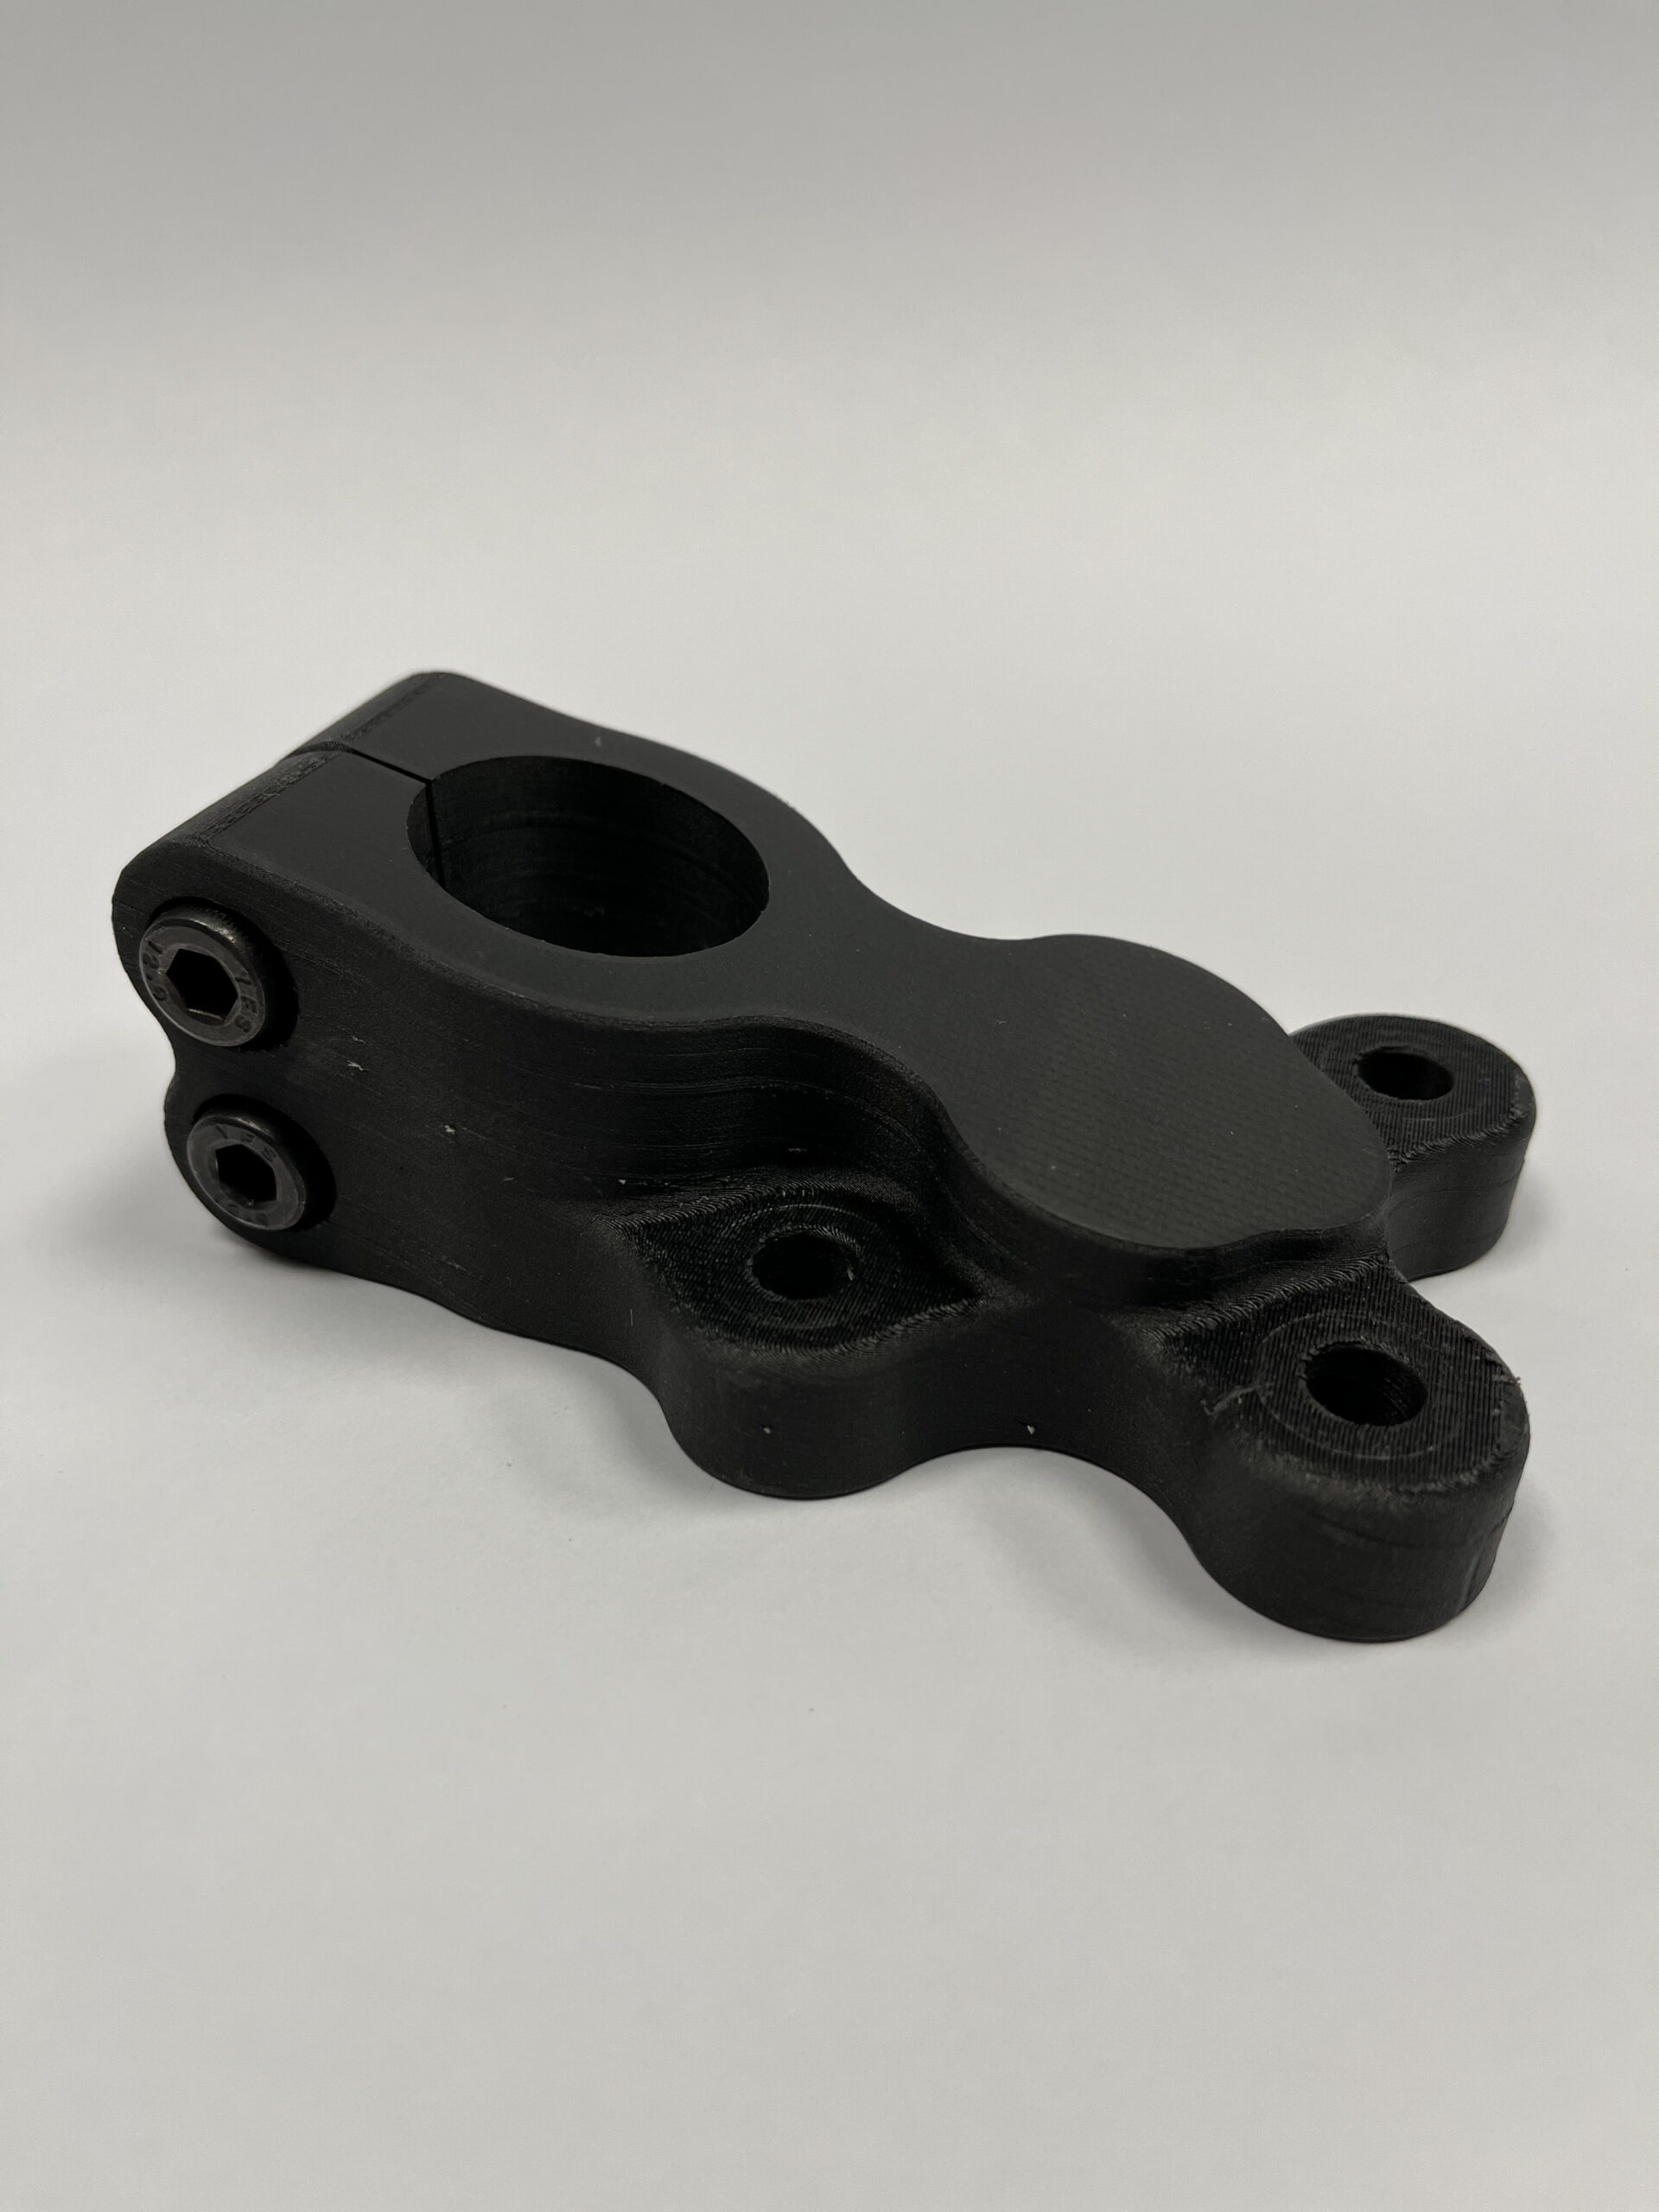 a 3D printed black composite